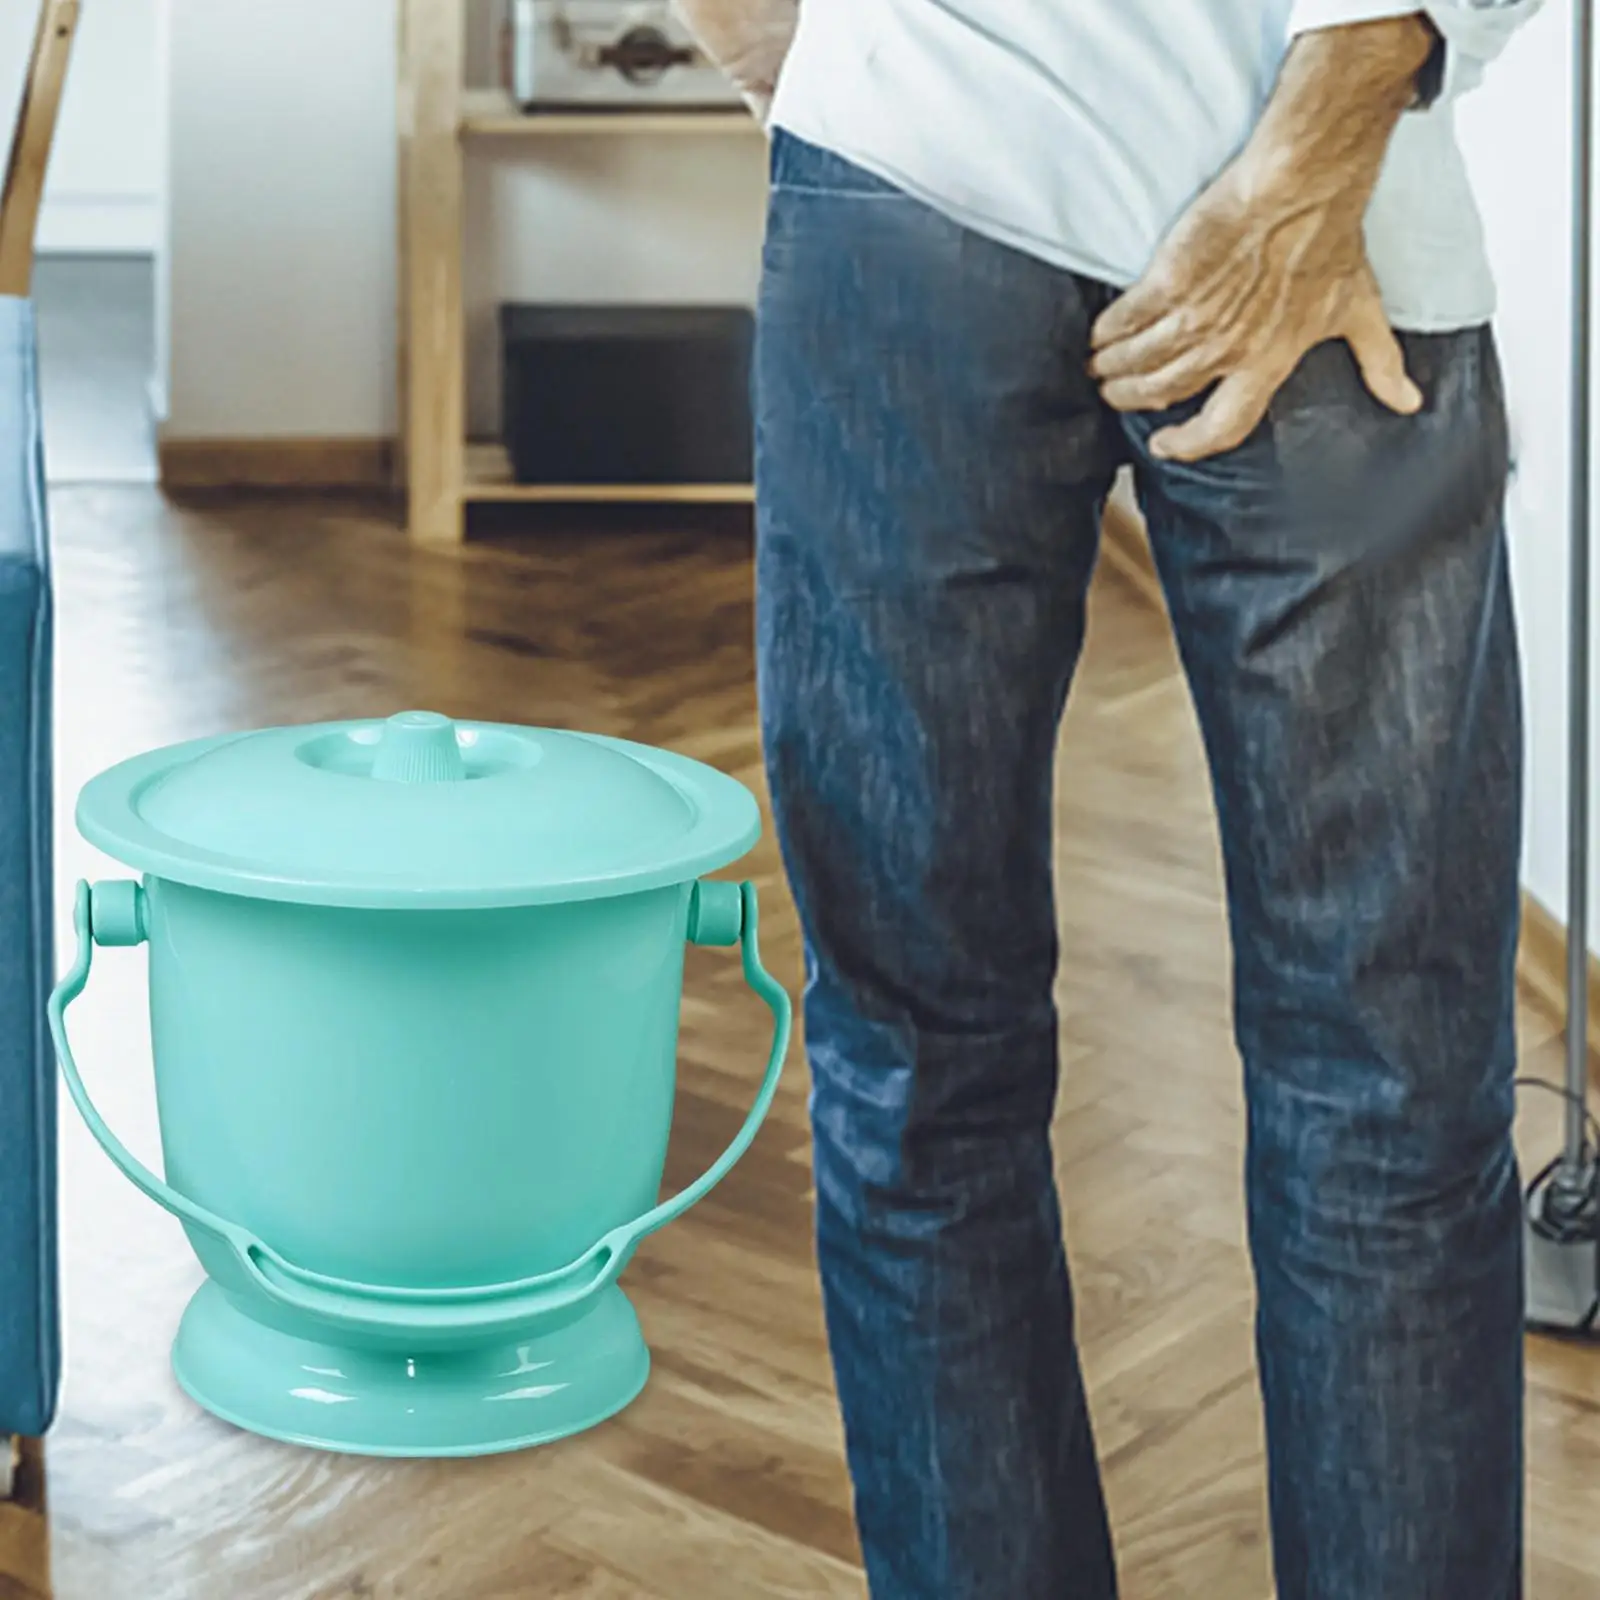 Household Chamber Pot with Lid Spittoon Bedpan Indoor Pee Potty Urine Bucket